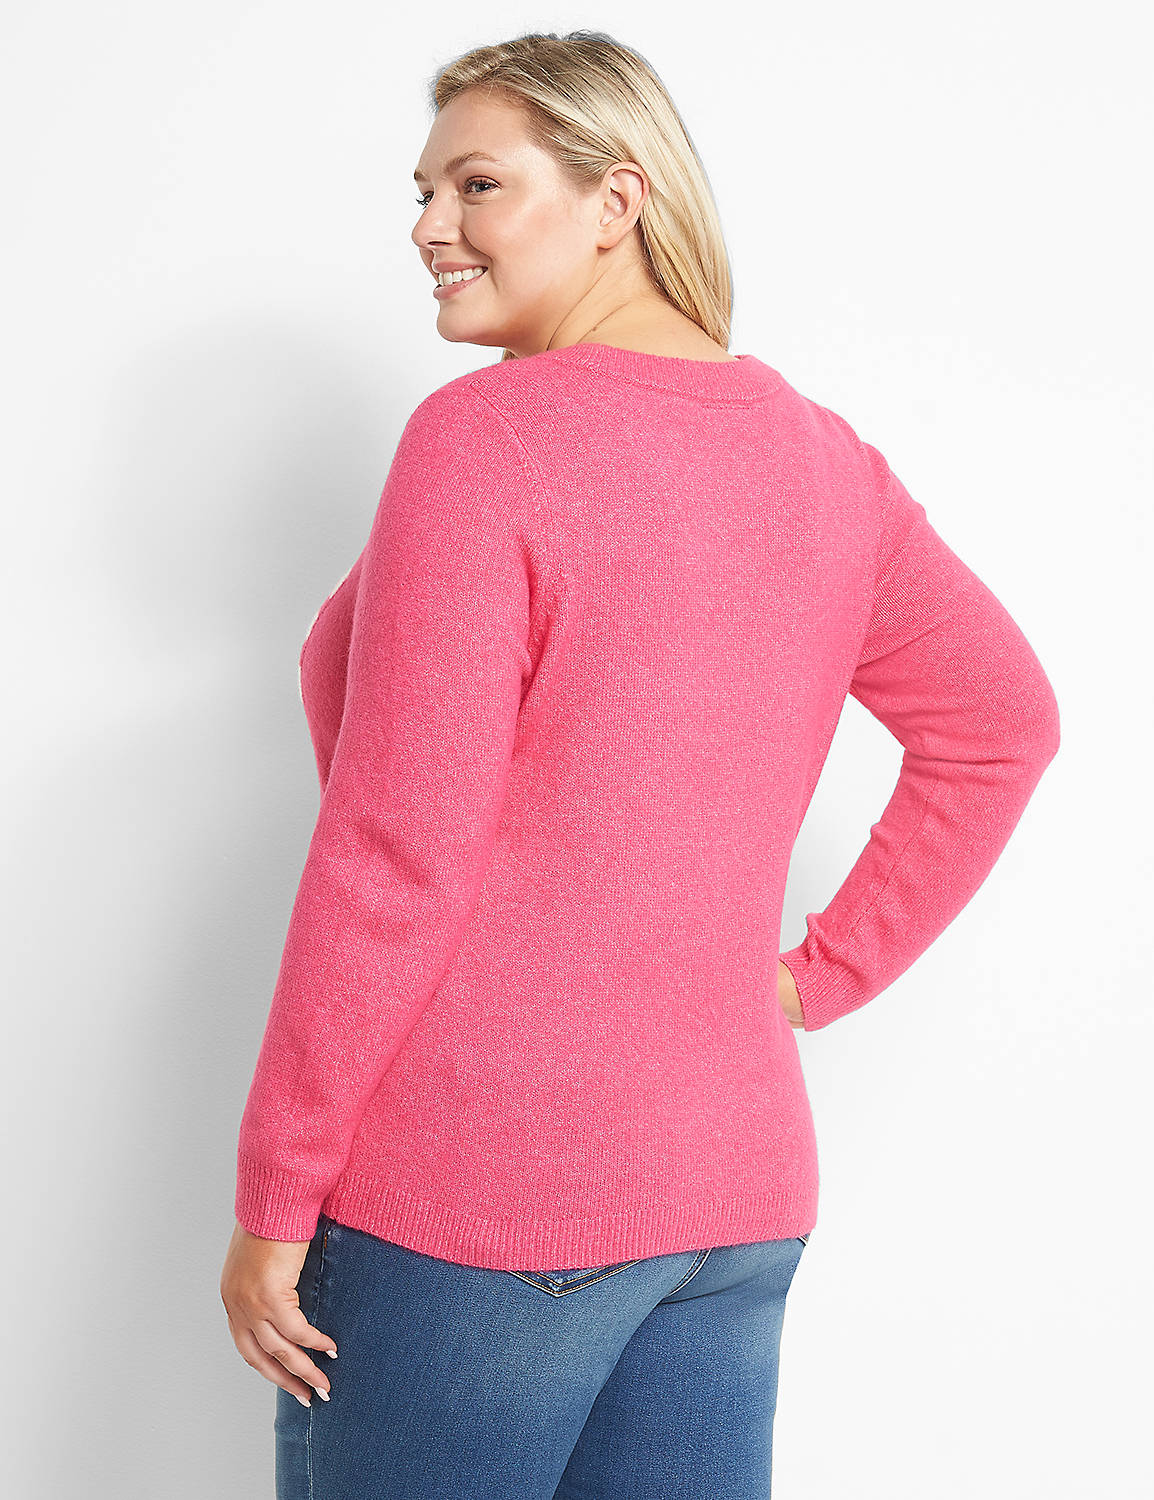 Crew-Neck Love Sweater Product Image 2